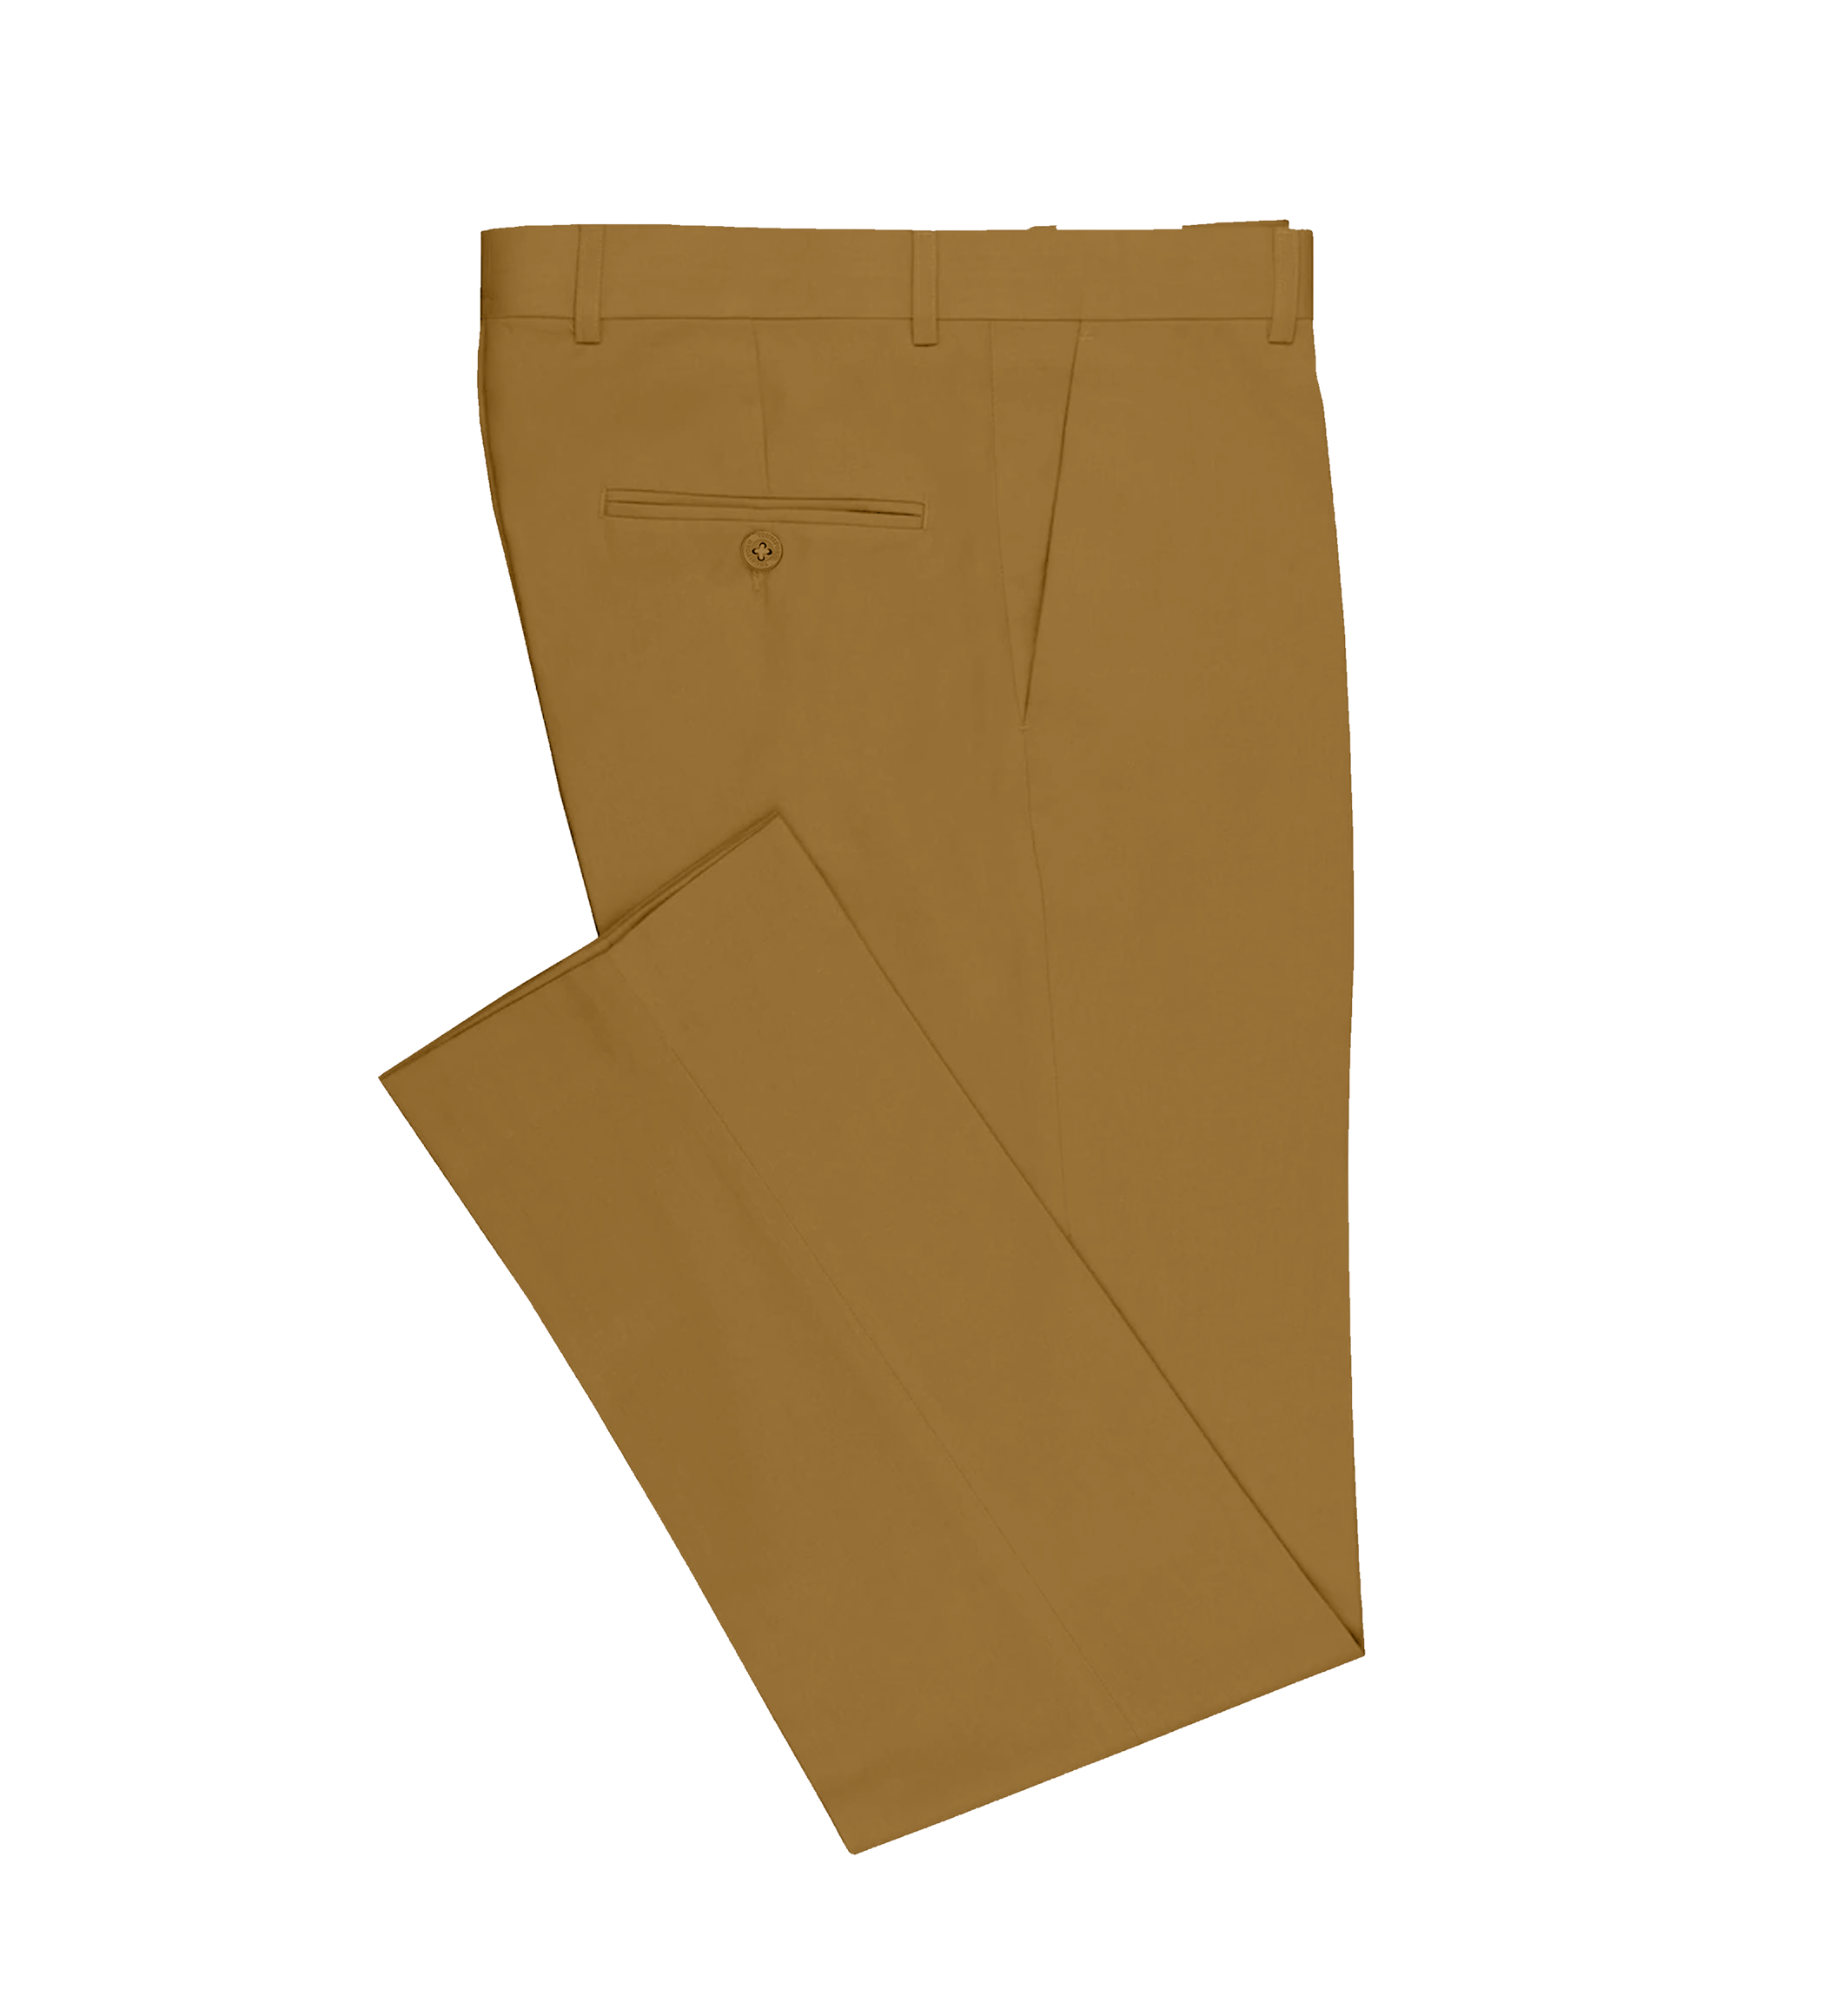 Mustard Brown Fixed Belt Pants - Youniform